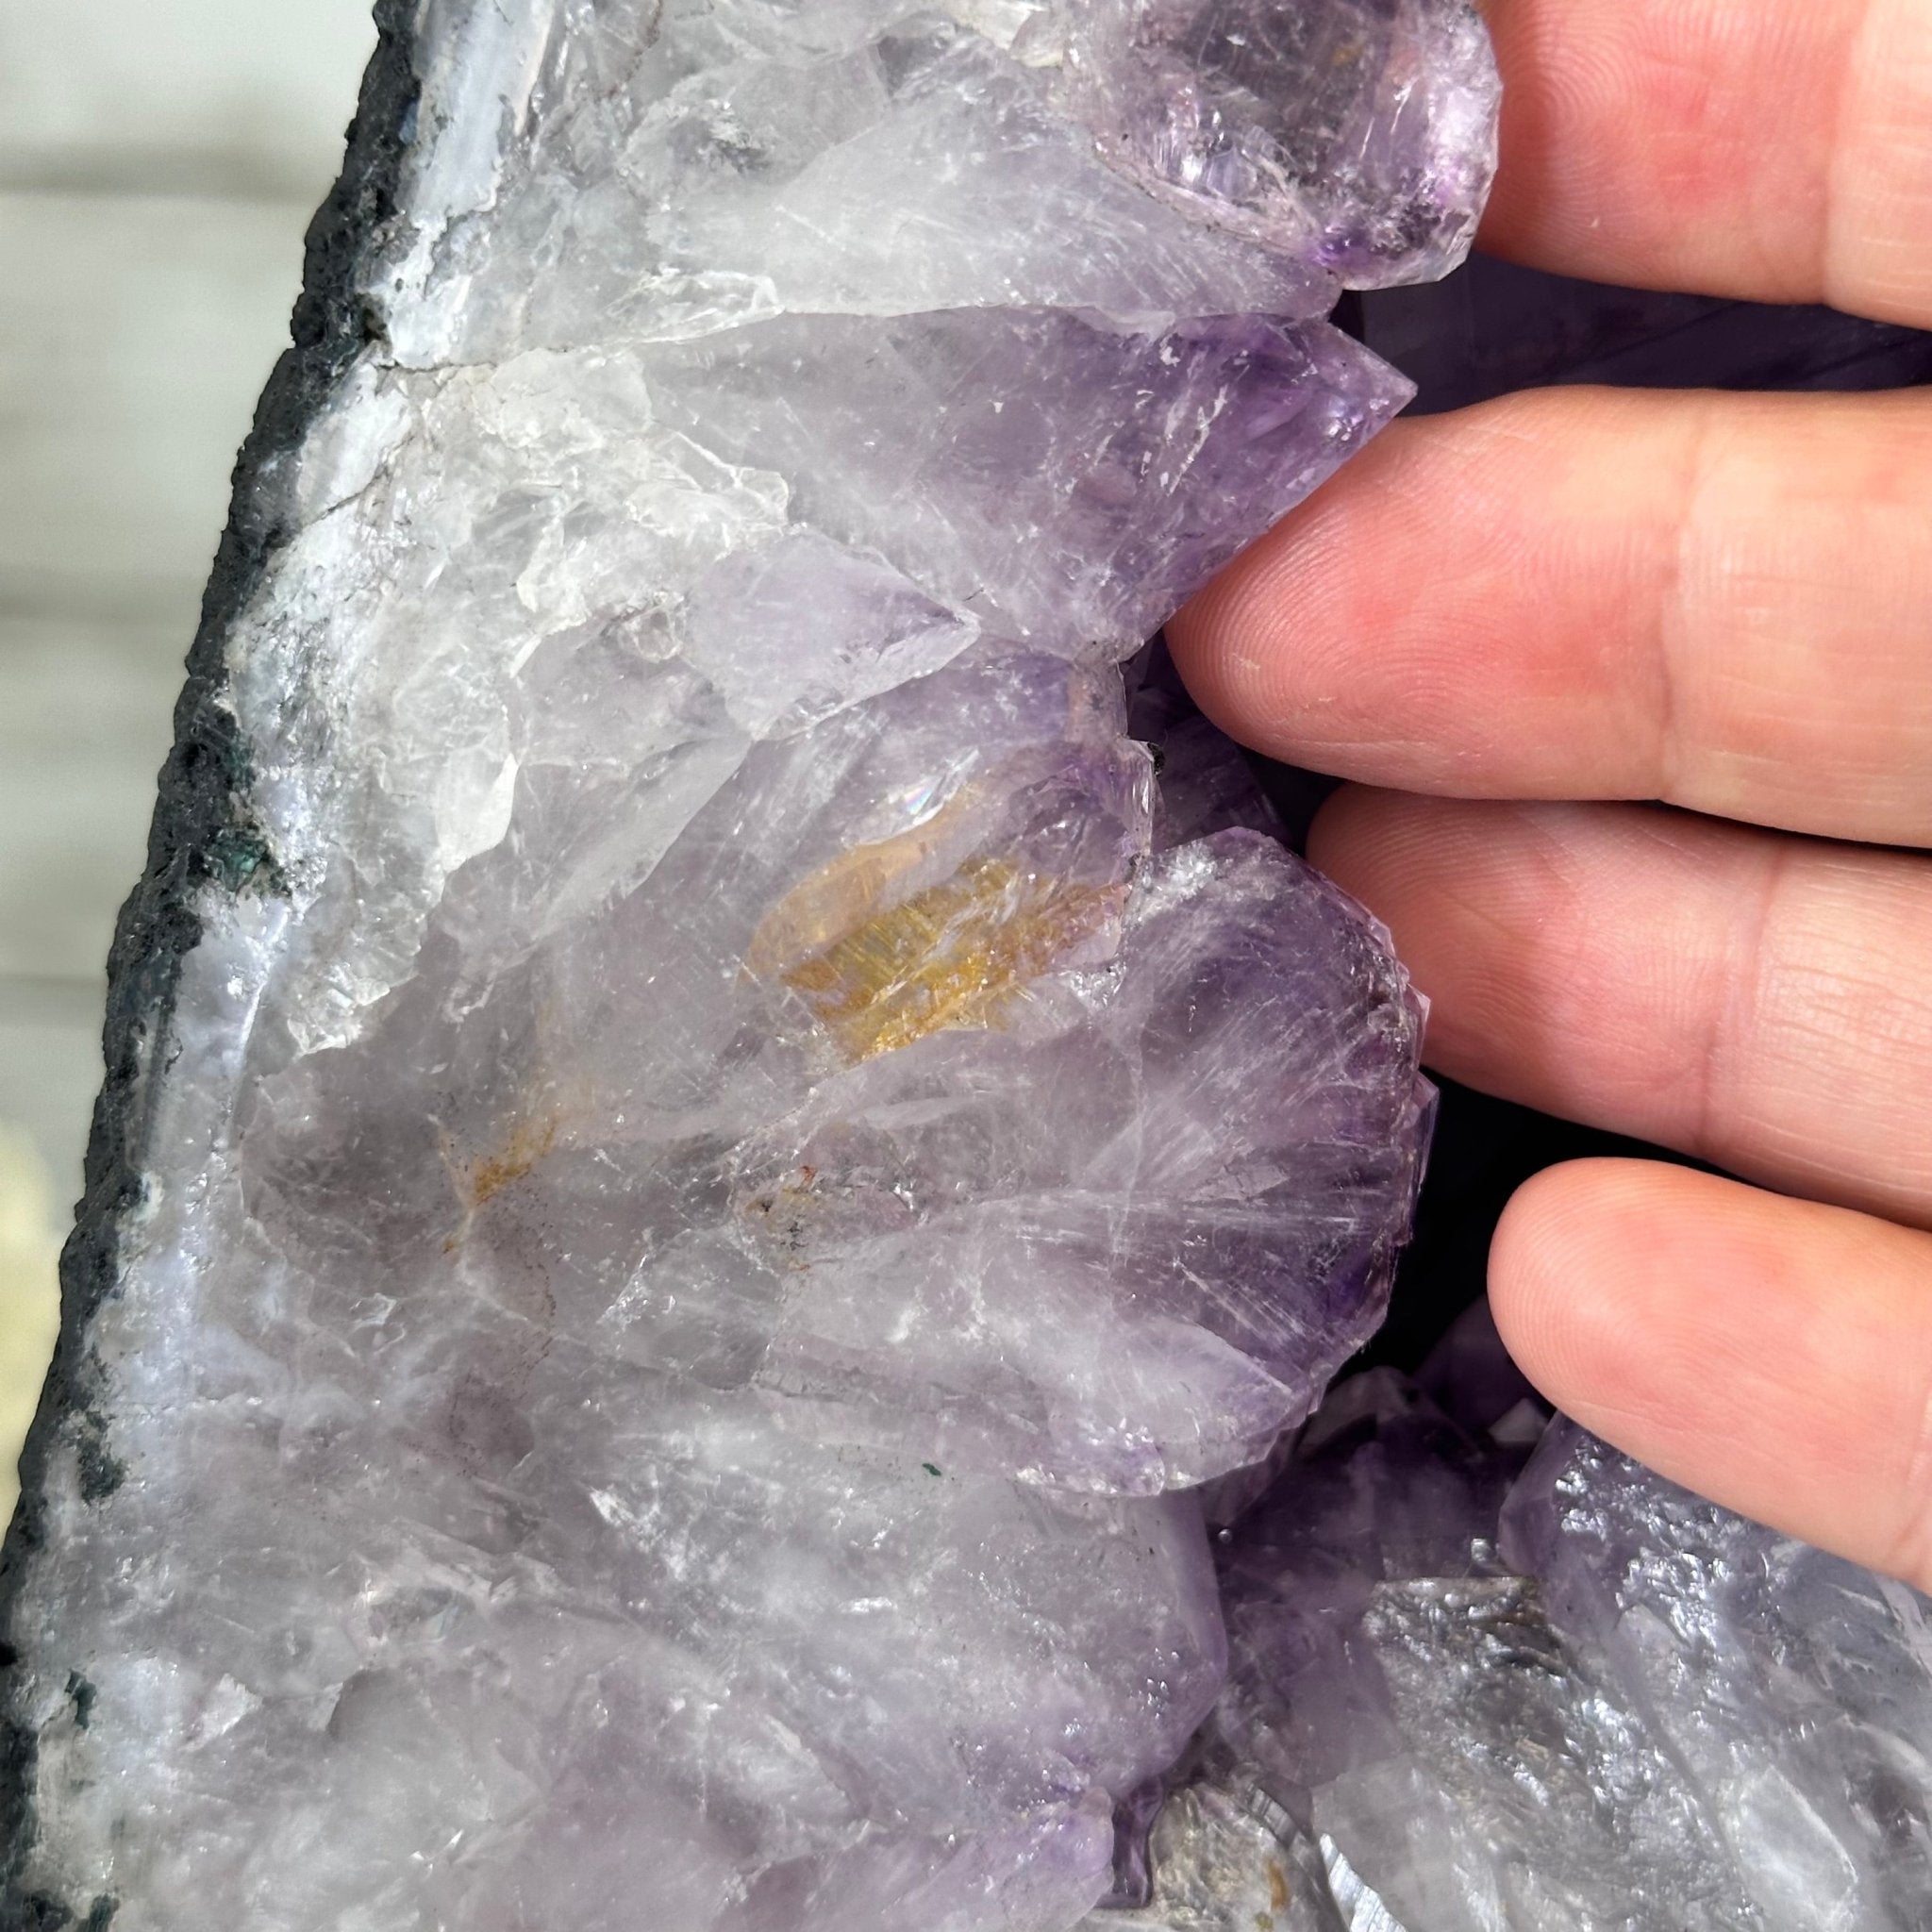 Standard Quality Amethyst Crystal on Cement Base, 37.7 lbs & 12.5" Tall #5614-0079 - Brazil GemsBrazil GemsStandard Quality Amethyst Crystal on Cement Base, 37.7 lbs & 12.5" Tall #5614-0079Clusters on Cement Bases5614-0079